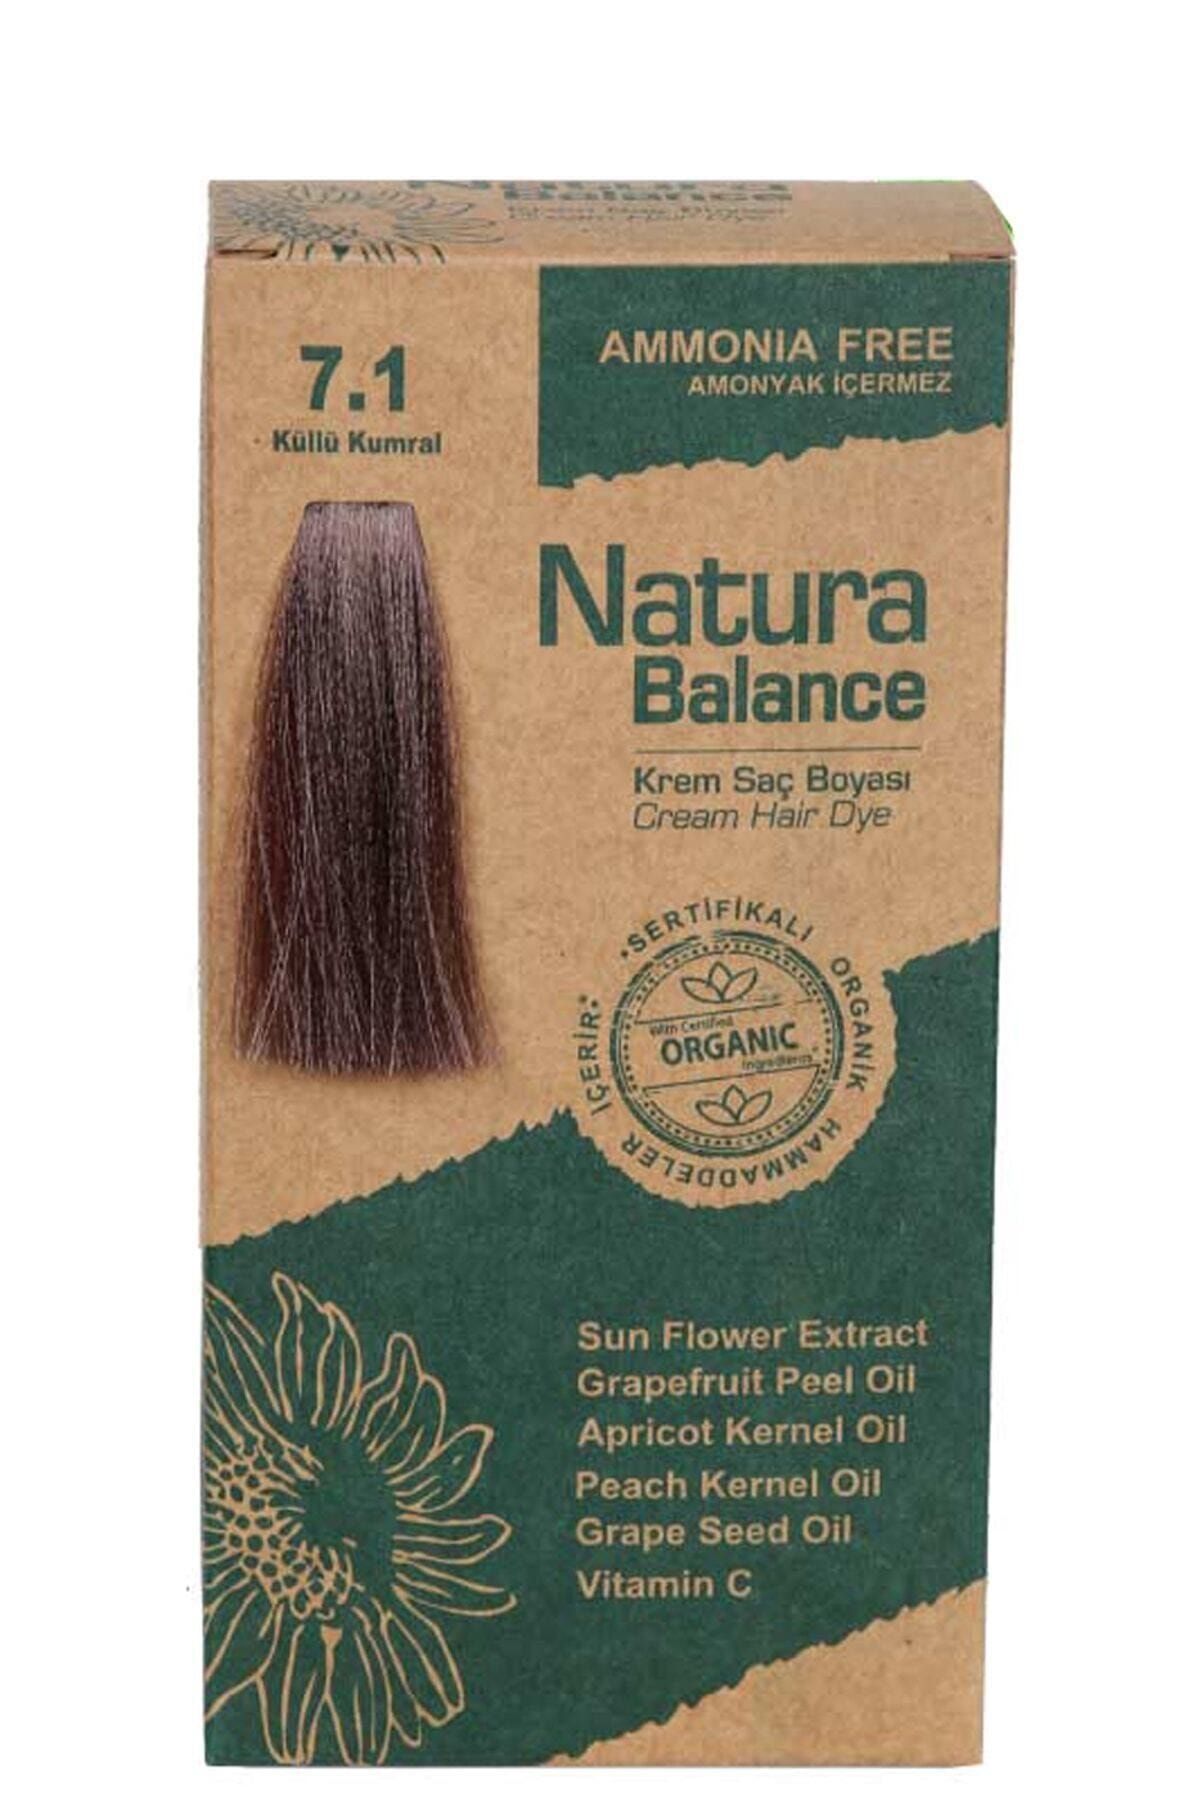 NATURABALANCE Natura Balance Saç Boyası - Organik Sertifikalı Küllü Kumral 7.1 8699367128025